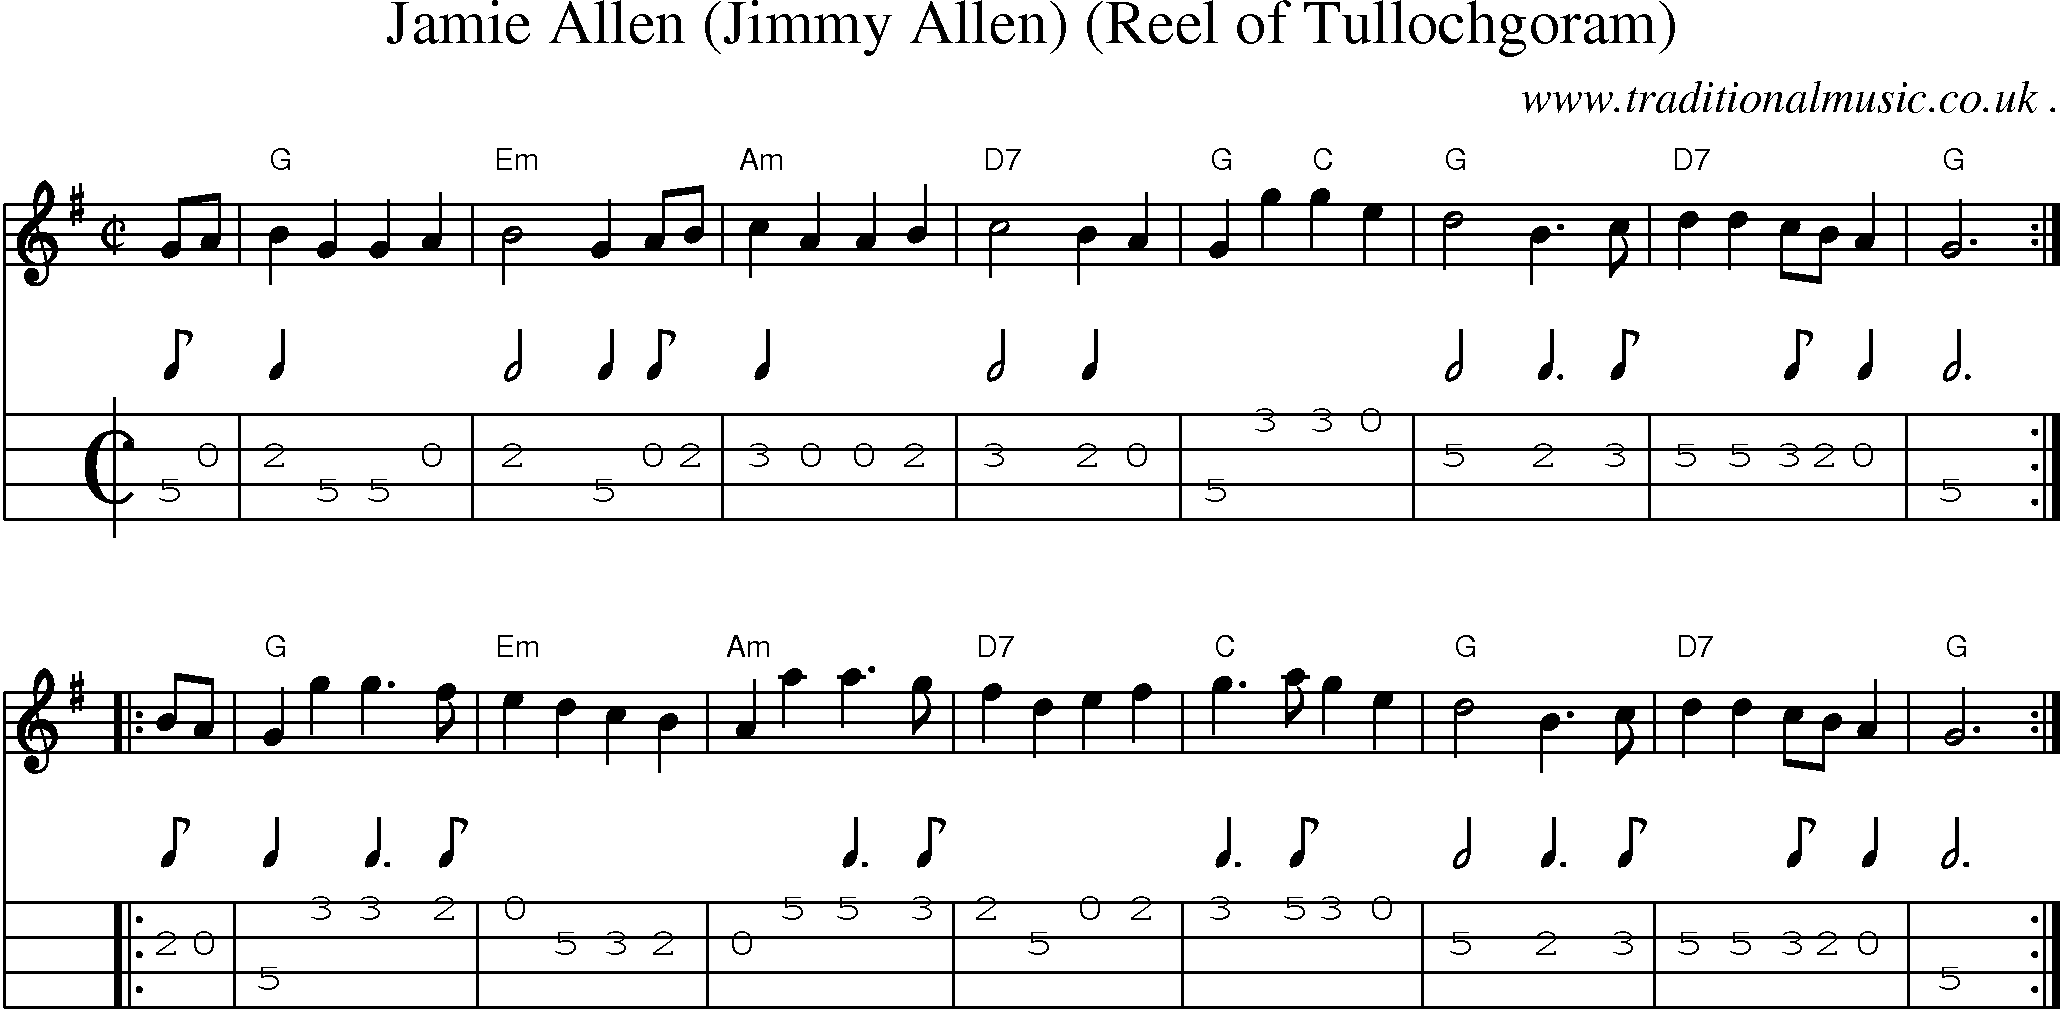 Sheet-music  score, Chords and Mandolin Tabs for Jamie Allen Jimmy Allen Reel Of Tullochgoram